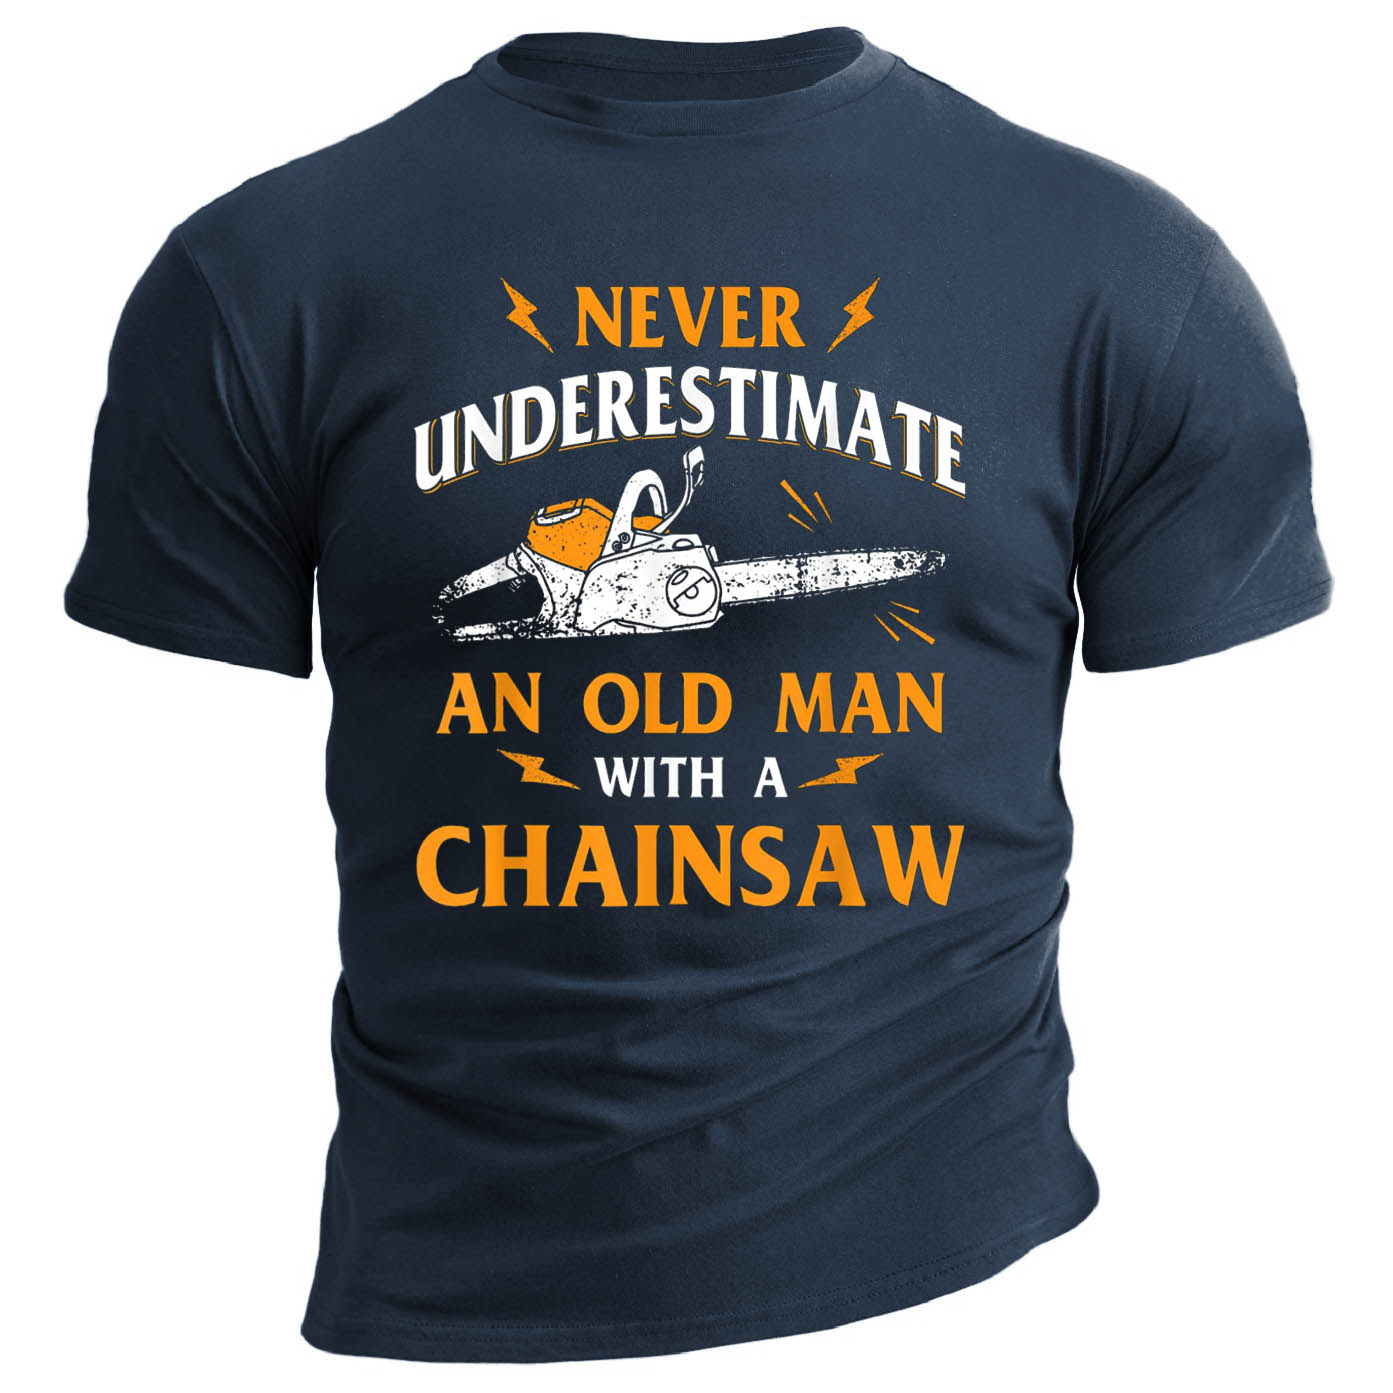 An Old Man Chainsaw Chic Men's Print Cotton T-shirt